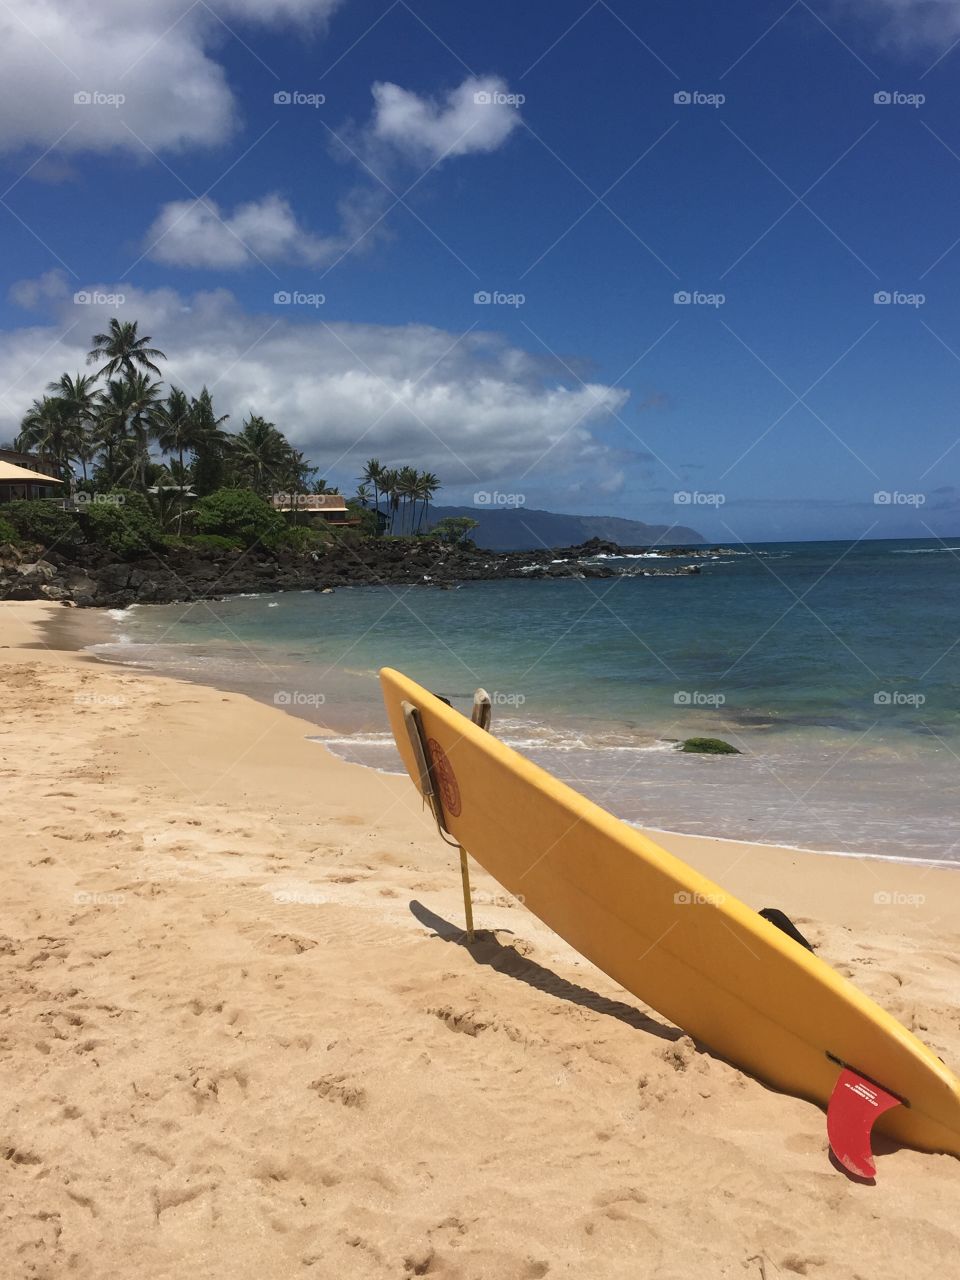 Life guard's surf board at Chun's Reef, Hawaii